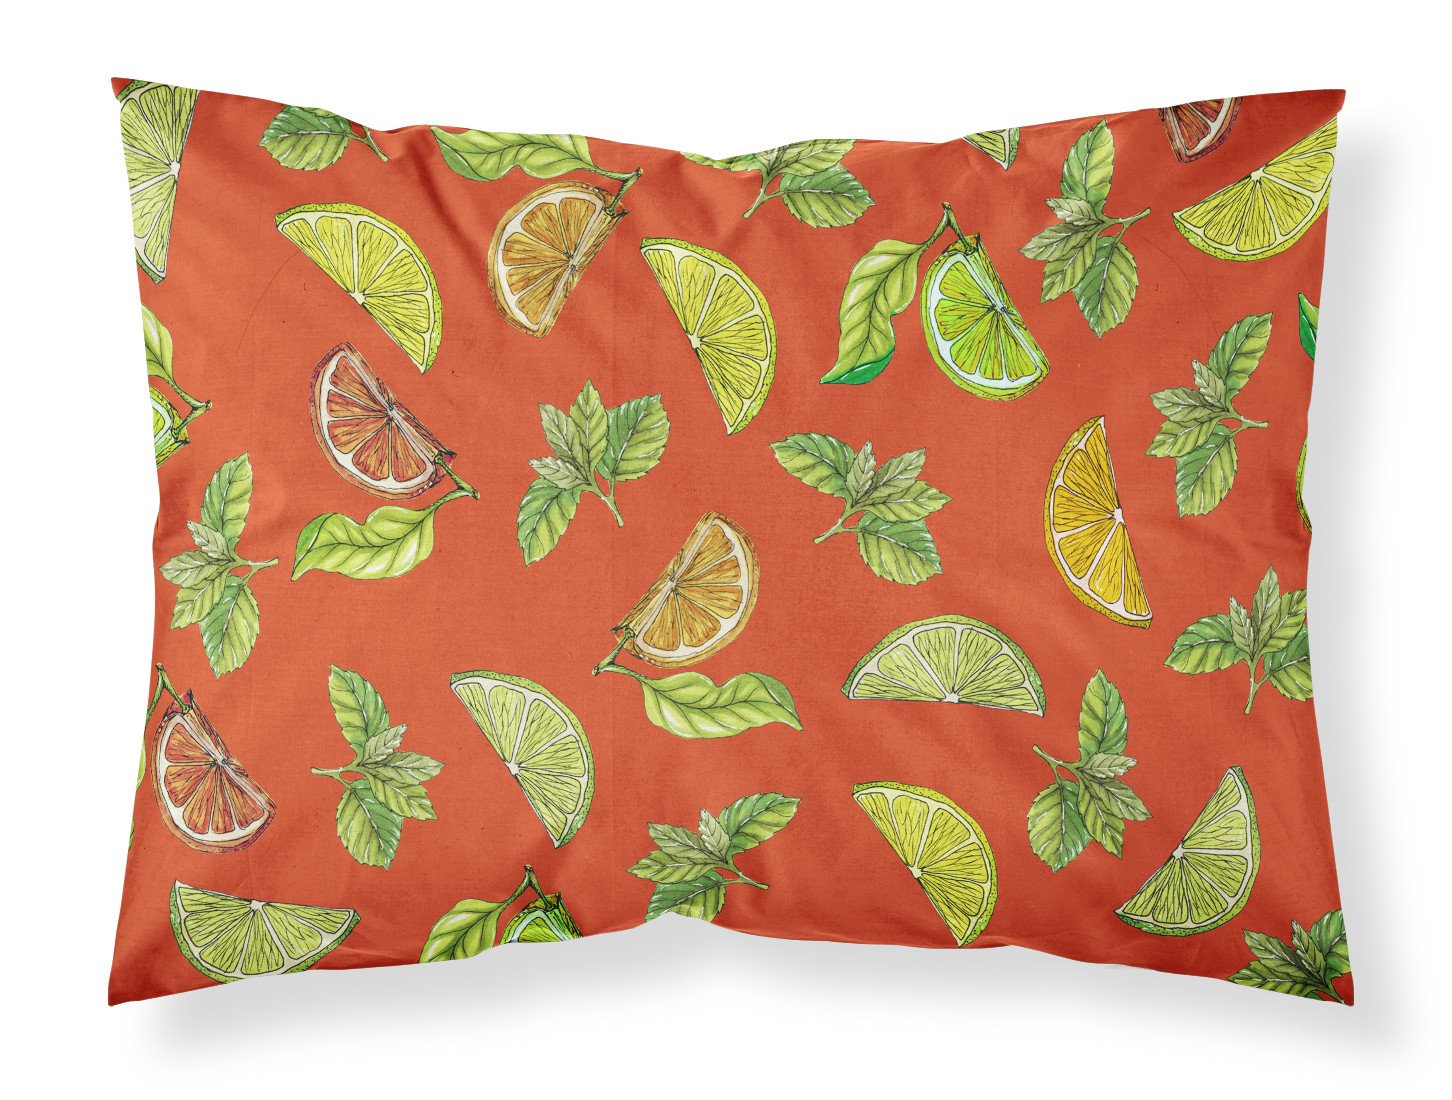 Lemons, Limes and Oranges Fabric Standard Pillowcase BB5205PILLOWCASE by Caroline's Treasures